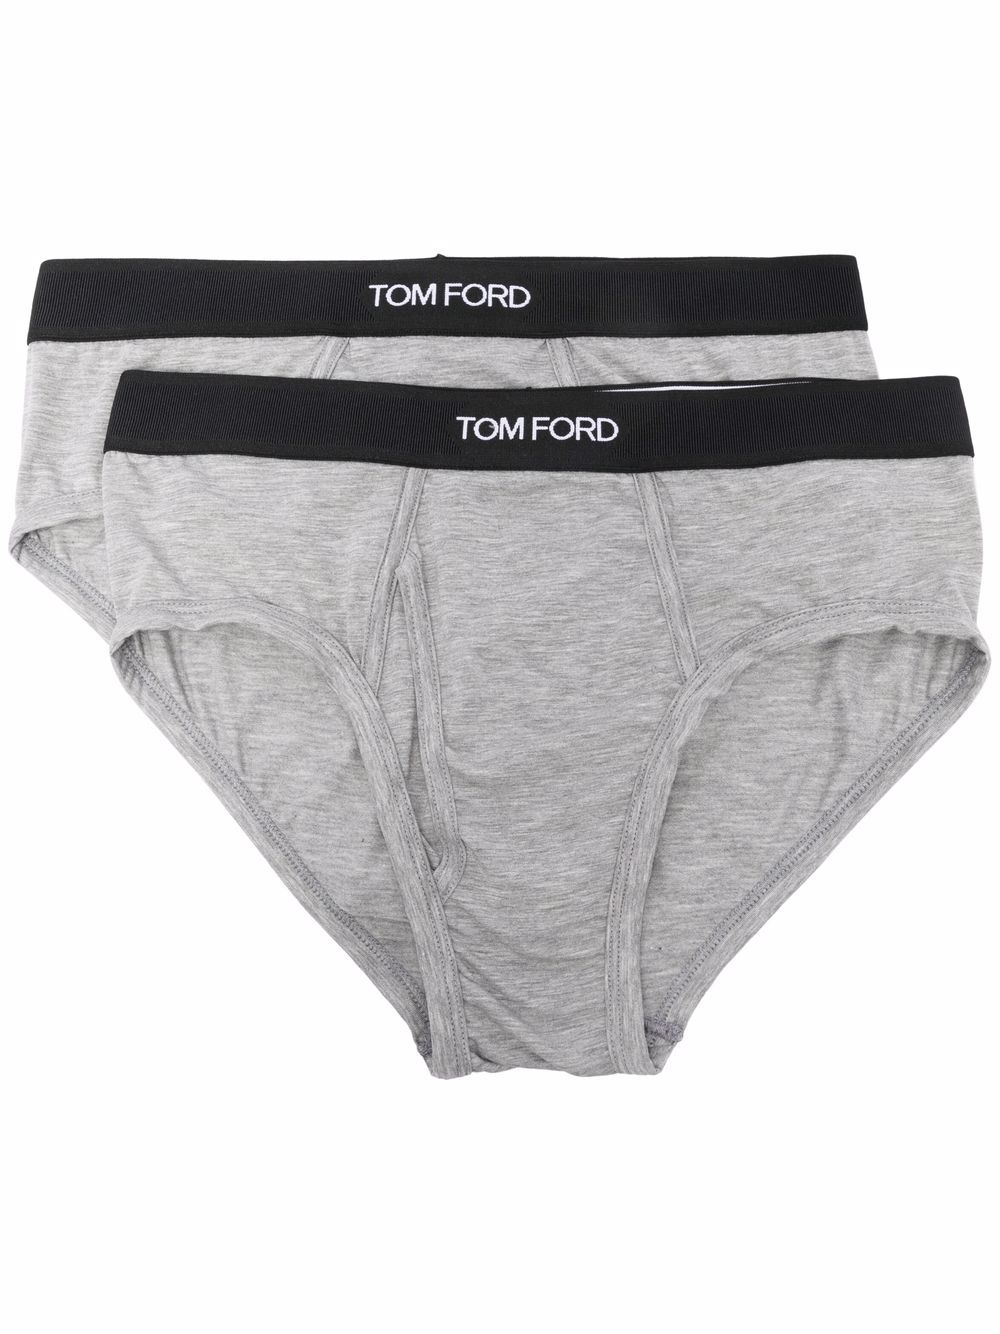 TOM FORD logo-waistband briefs (pack of 2) - Grey von TOM FORD